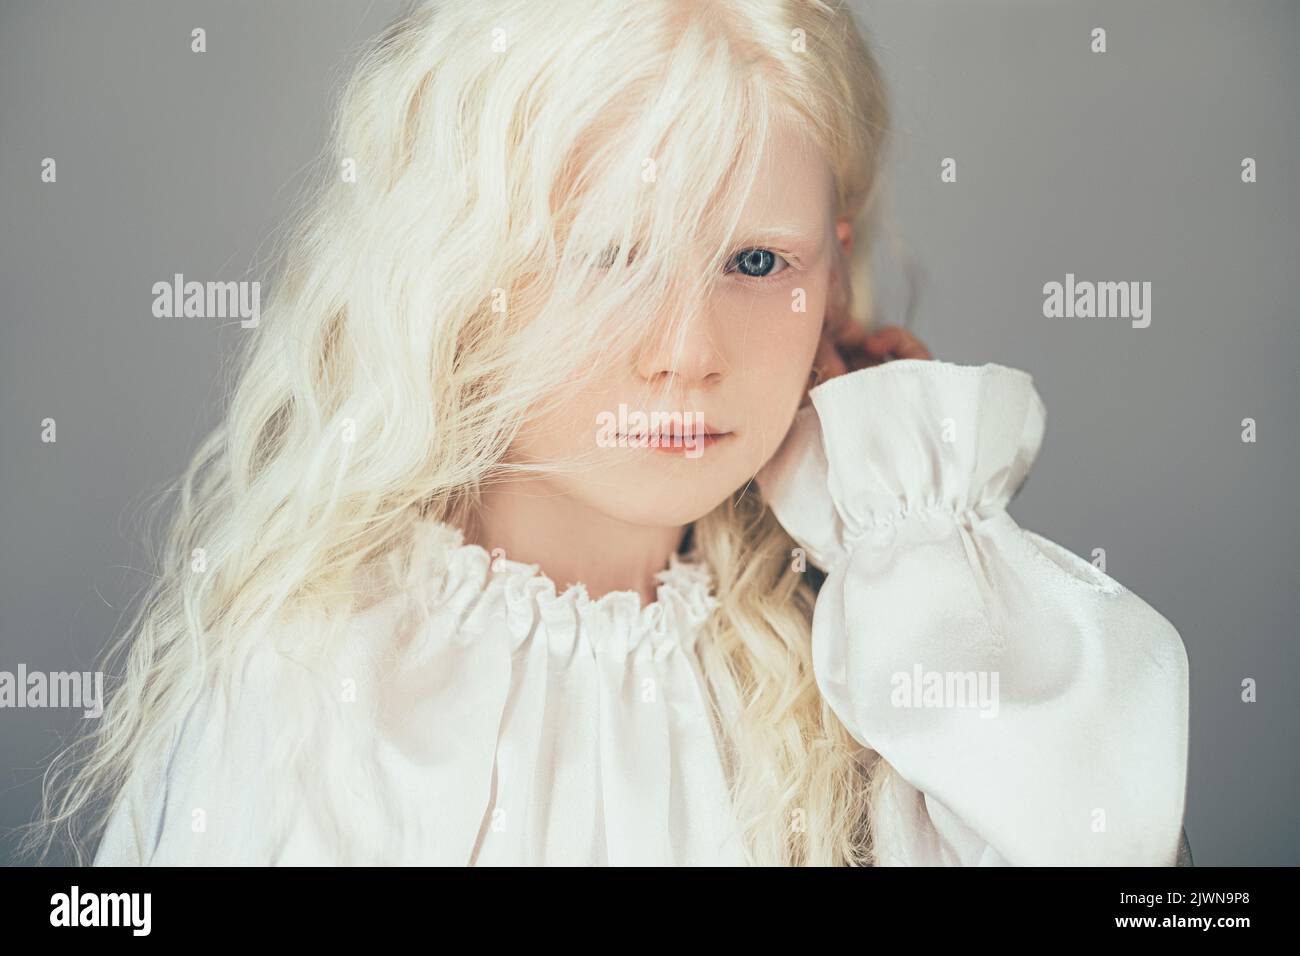 kid fashion portrait child beauty blonde girl Stock Photo